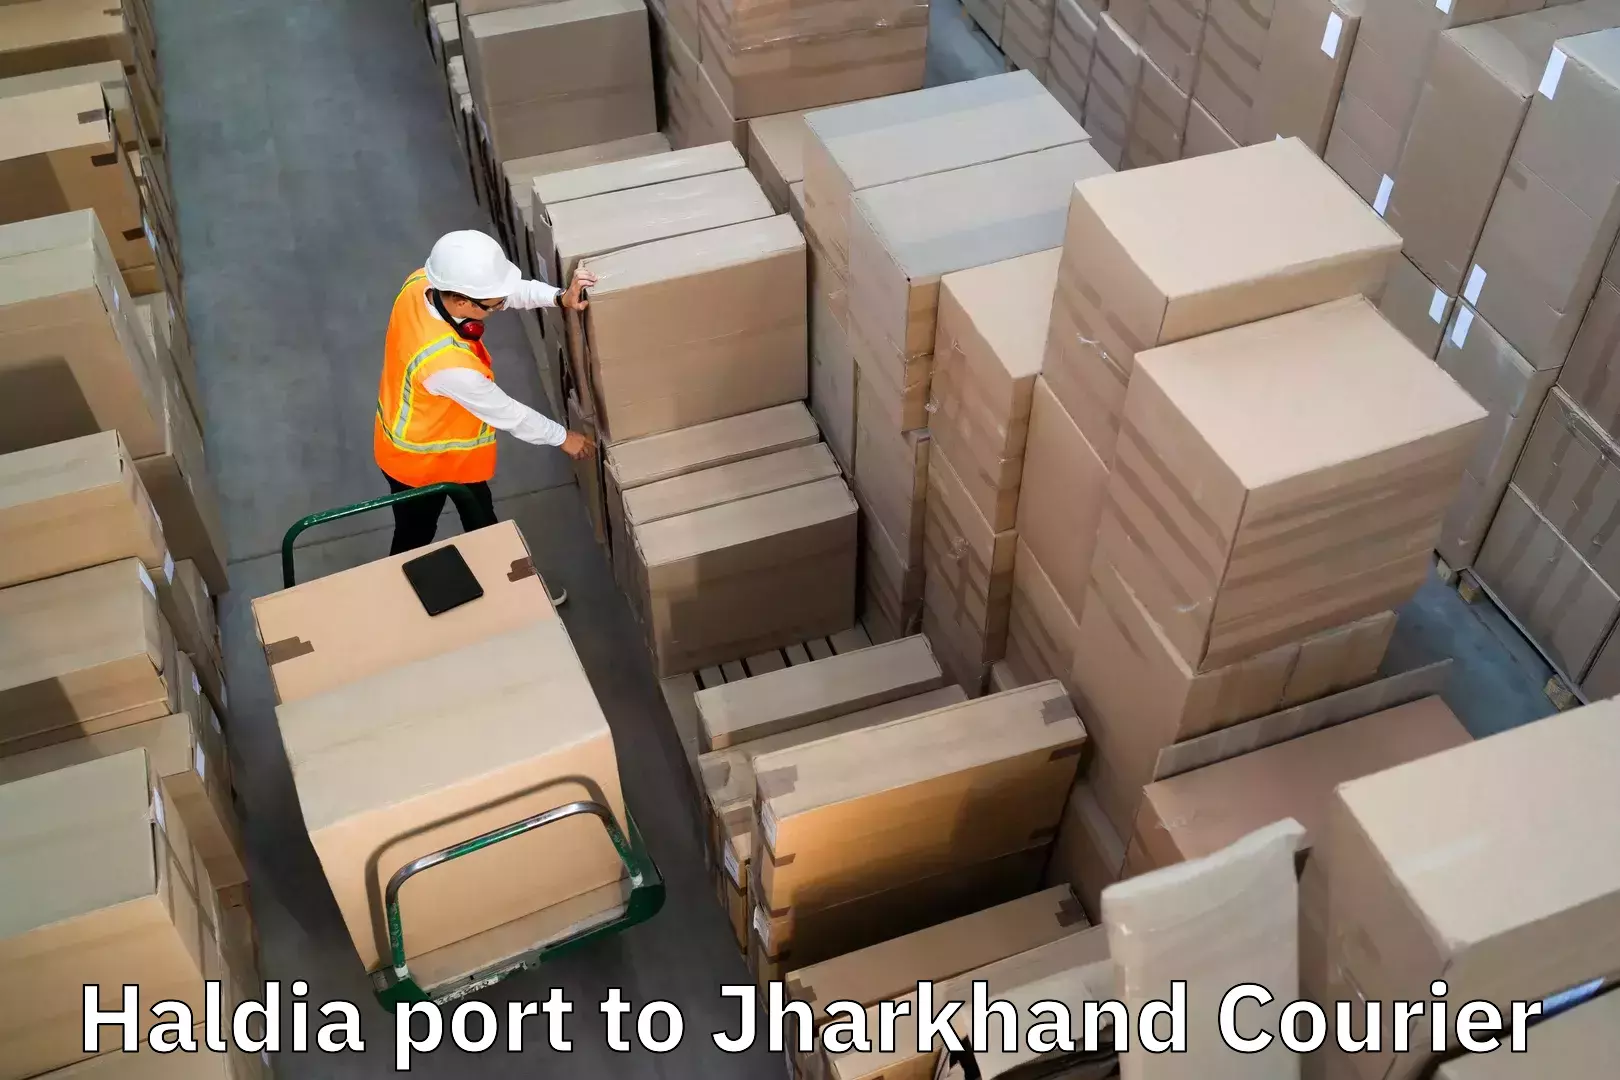 Excess baggage transport in Haldia port to Doranda